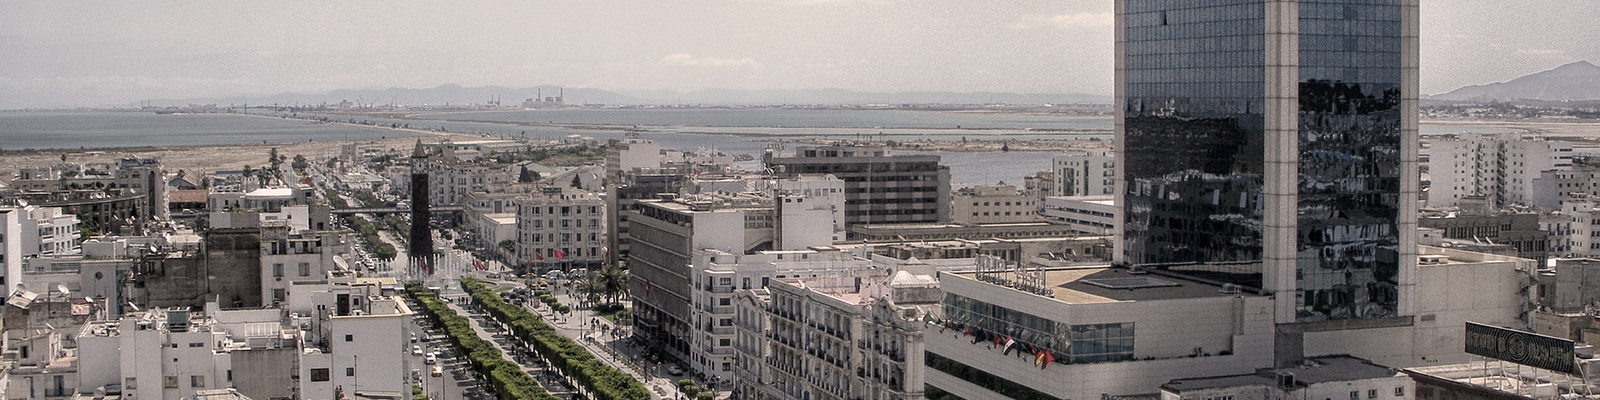 Cityscape with Mediterranean view, Tunis, Tunisia